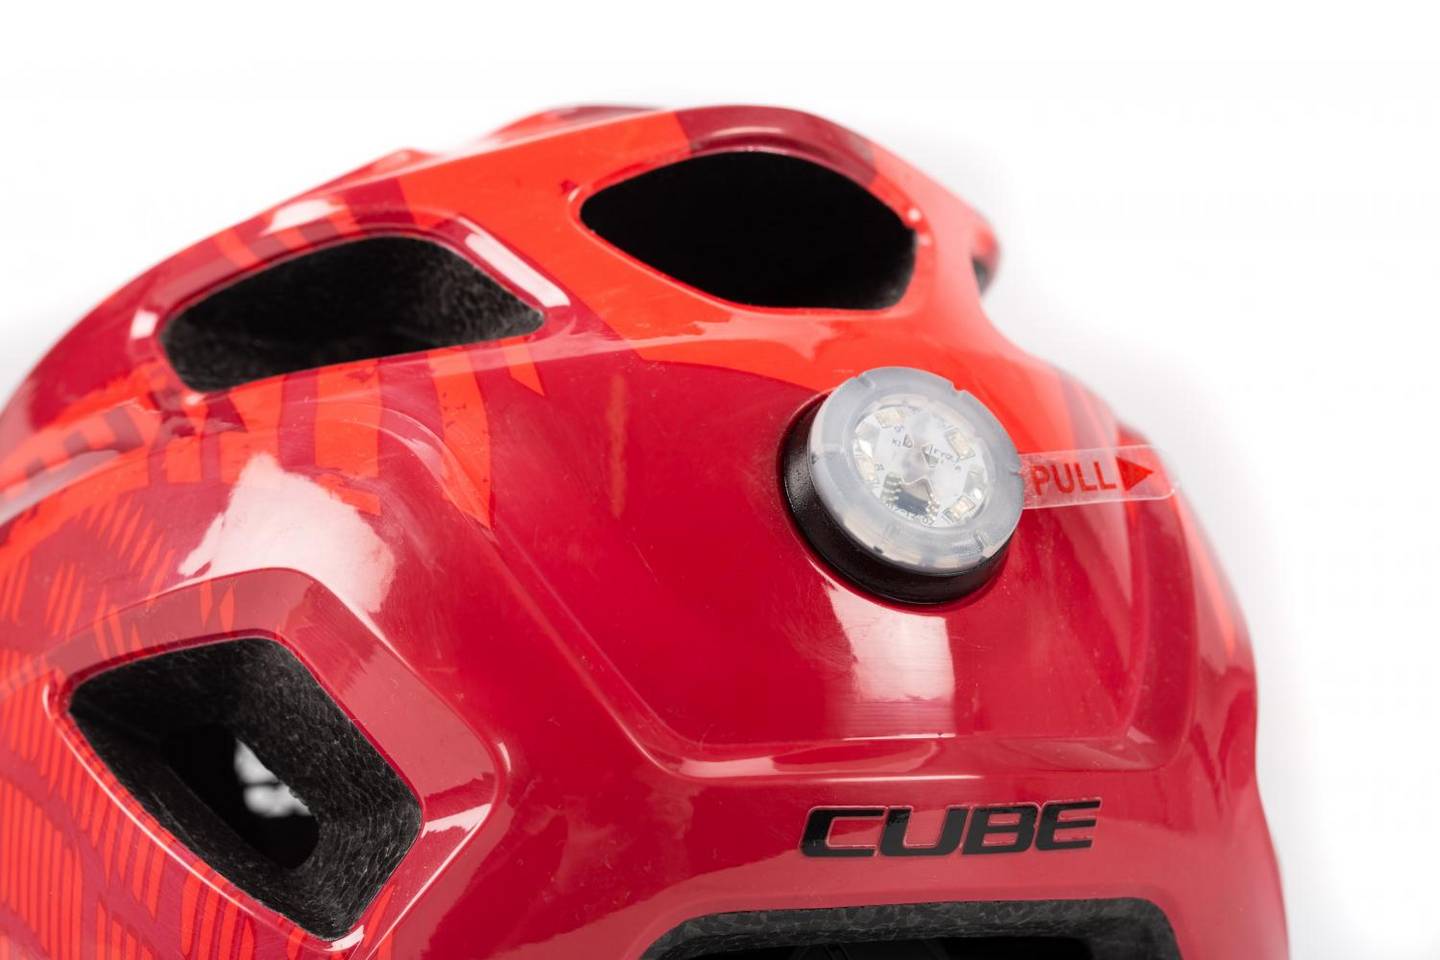 CUBE Helm ANT / red splash XS (46-51)